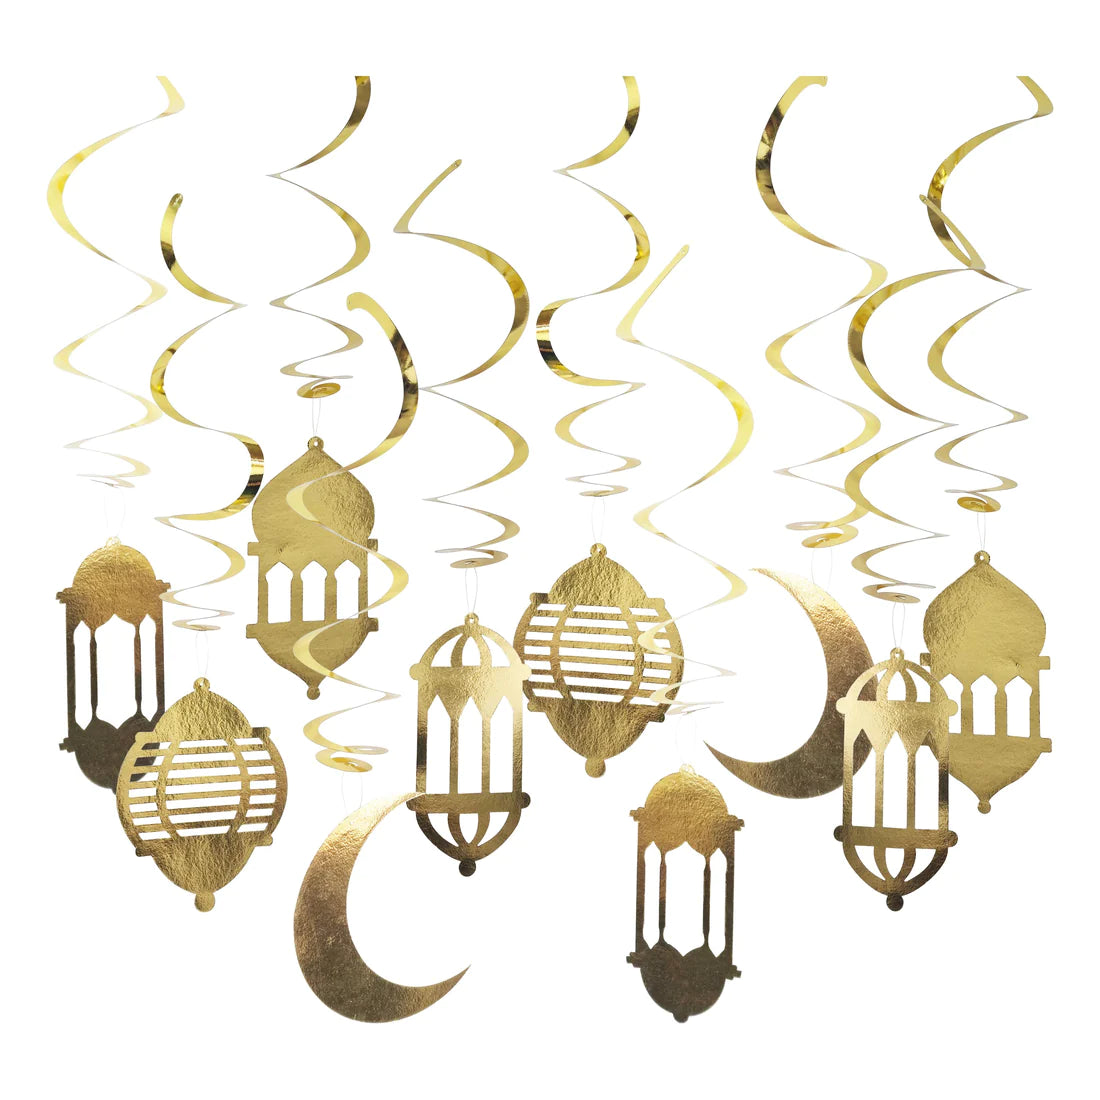 Pack of 10 Gold Spiral Lantern Eid Mubarak Hanging Mobile Decorations